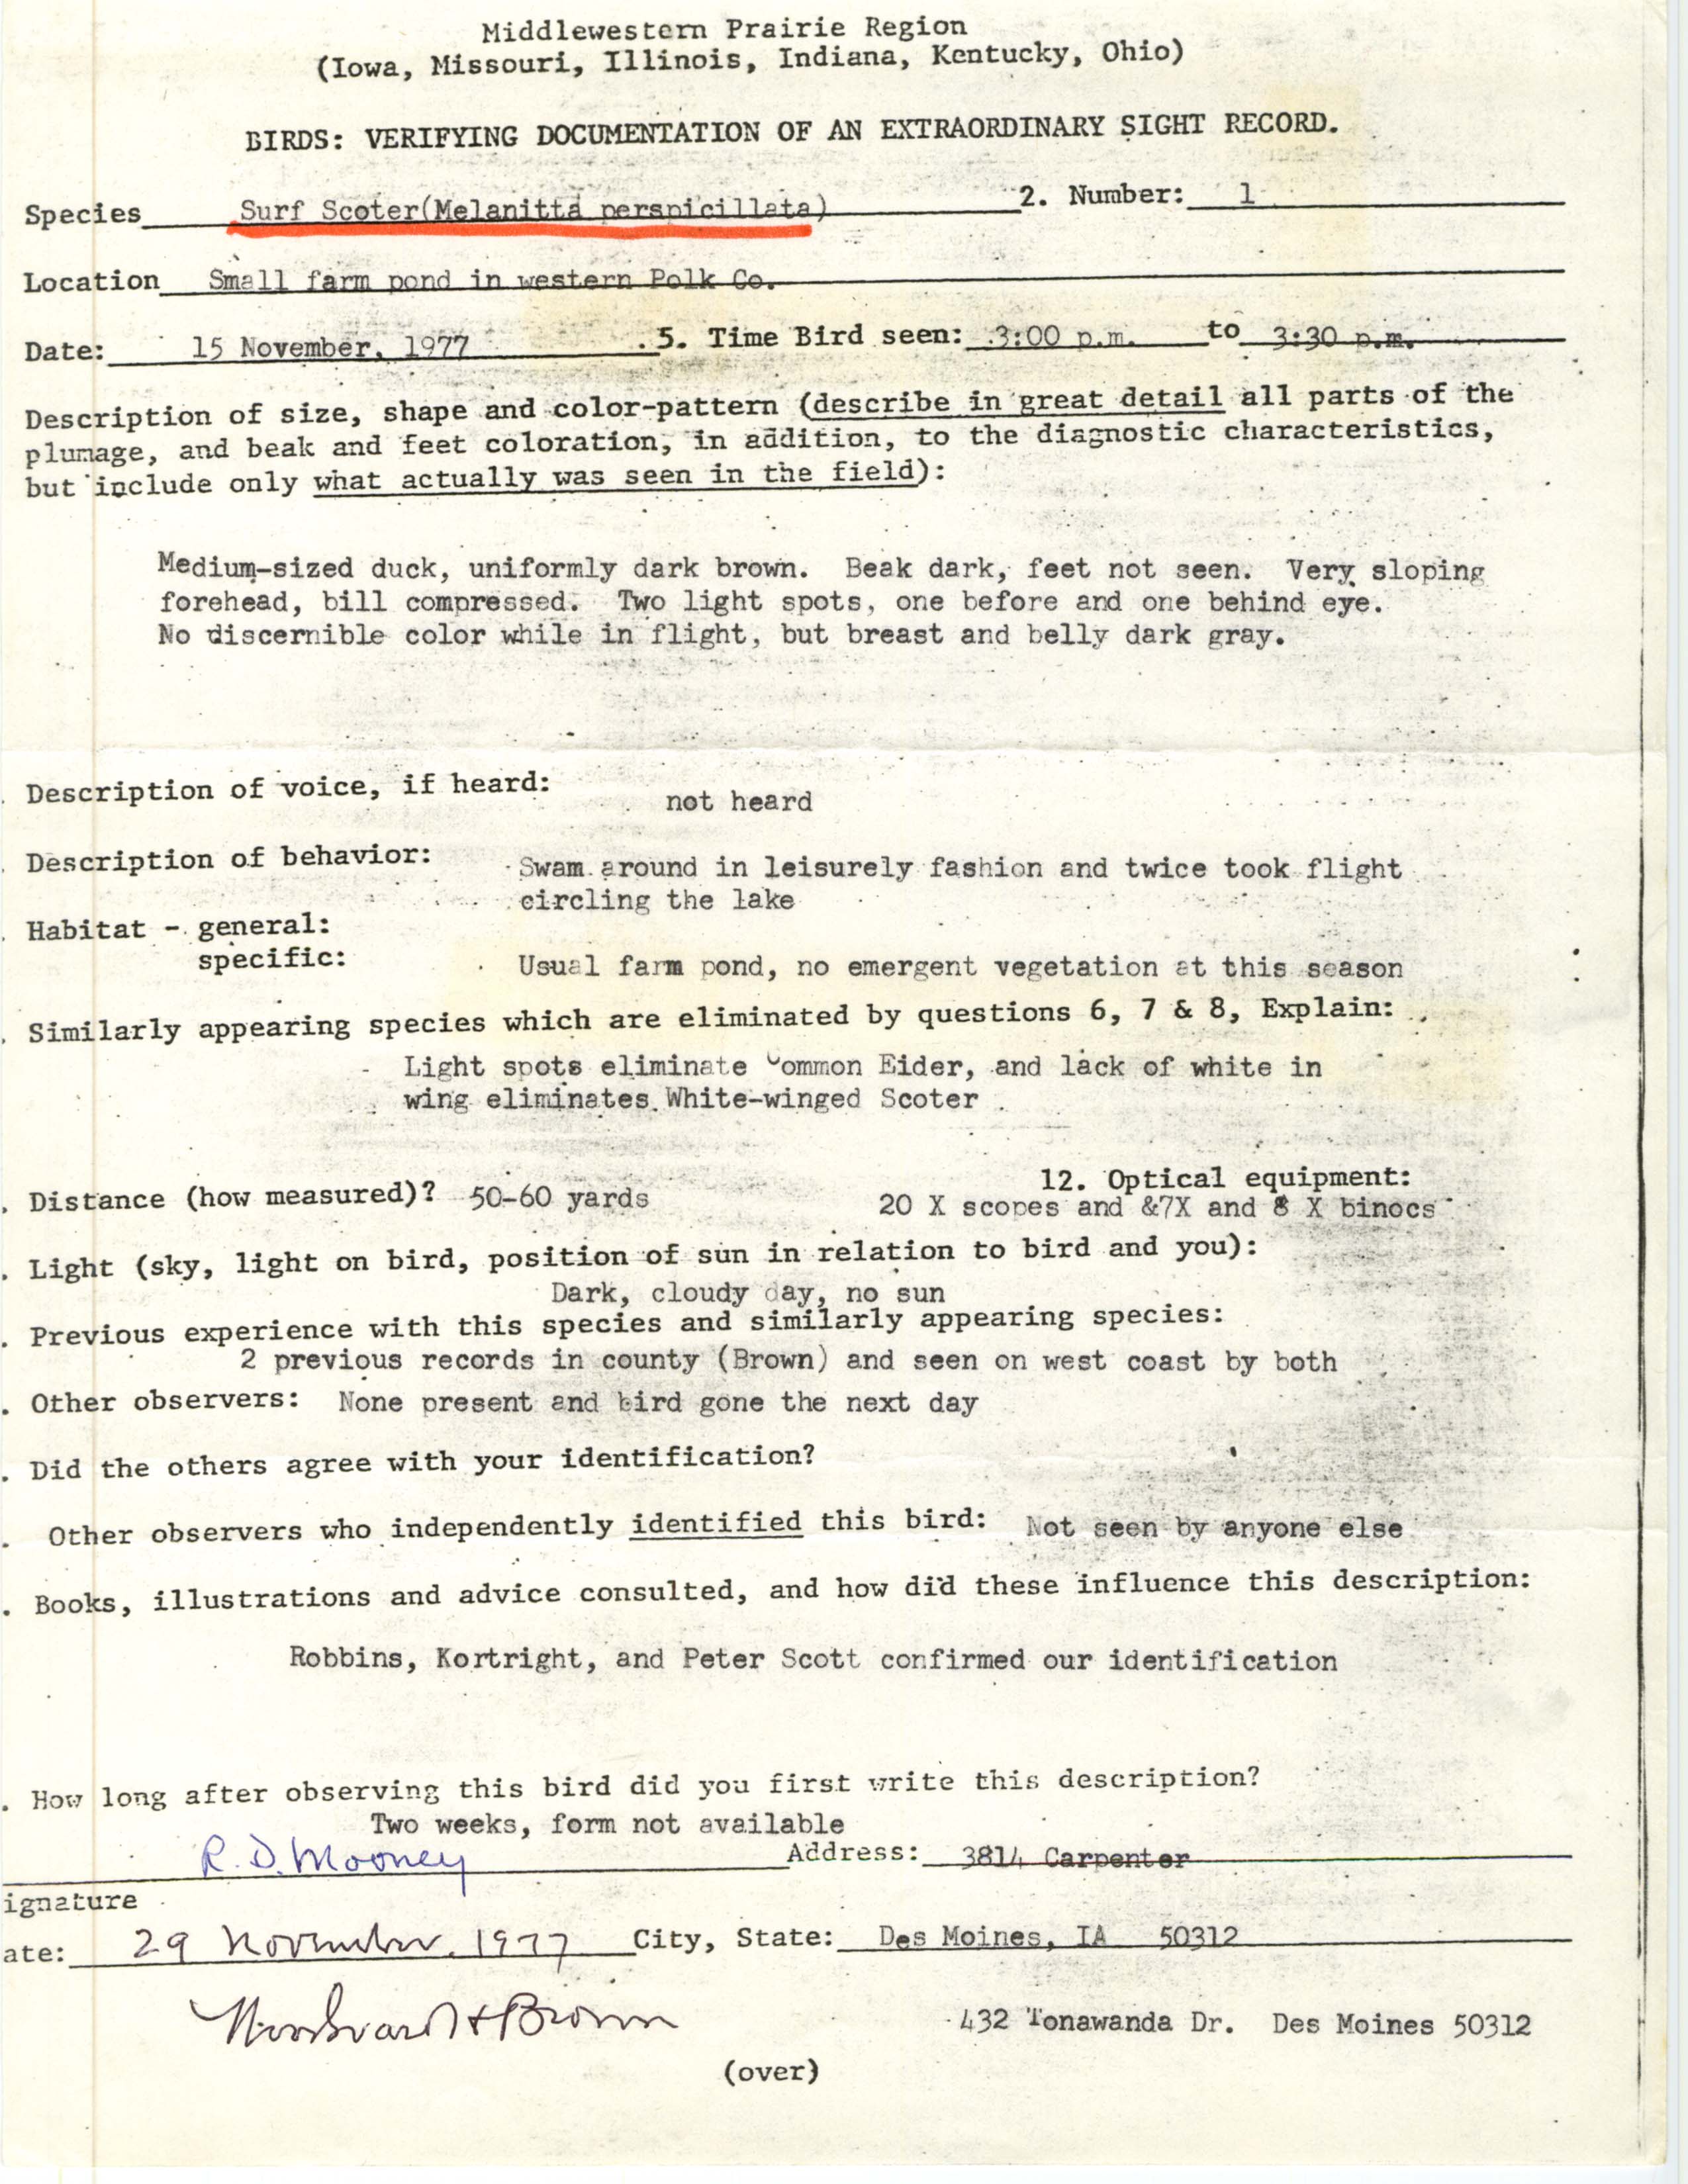 Rare bird documentation form for Surf Scoter in western Polk County, 1977